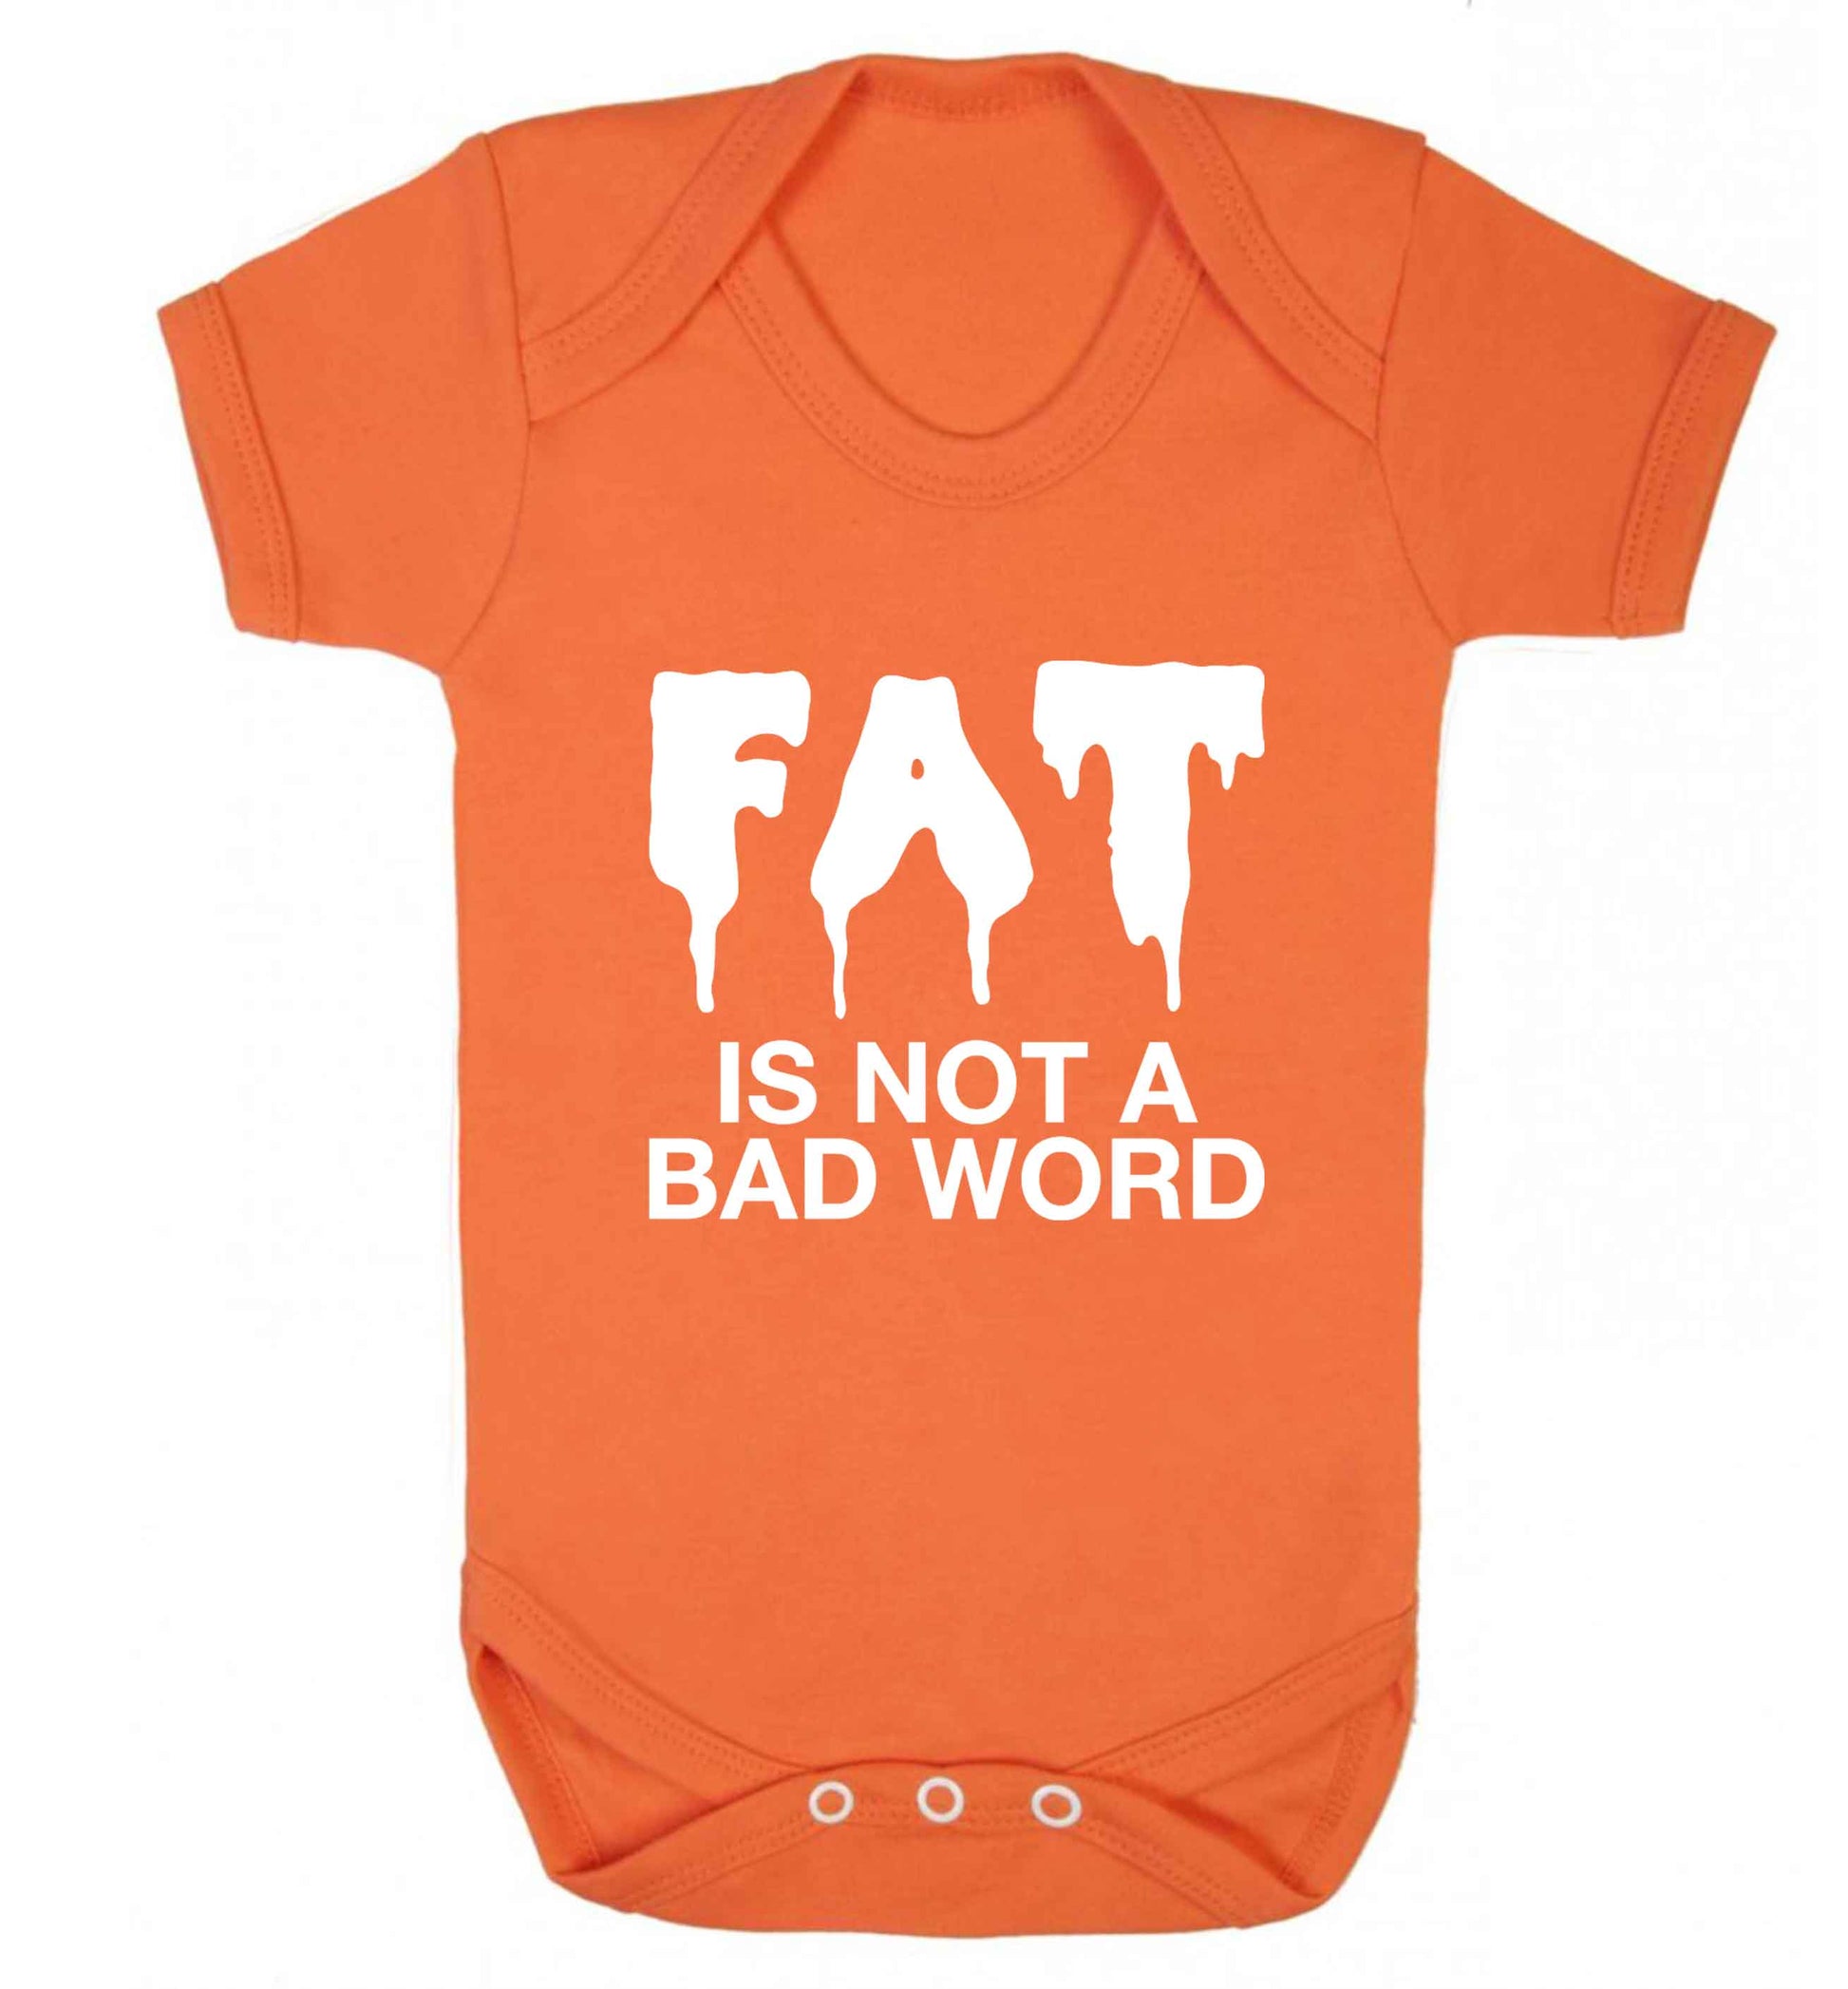 Fat is not a bad word baby vest orange 18-24 months